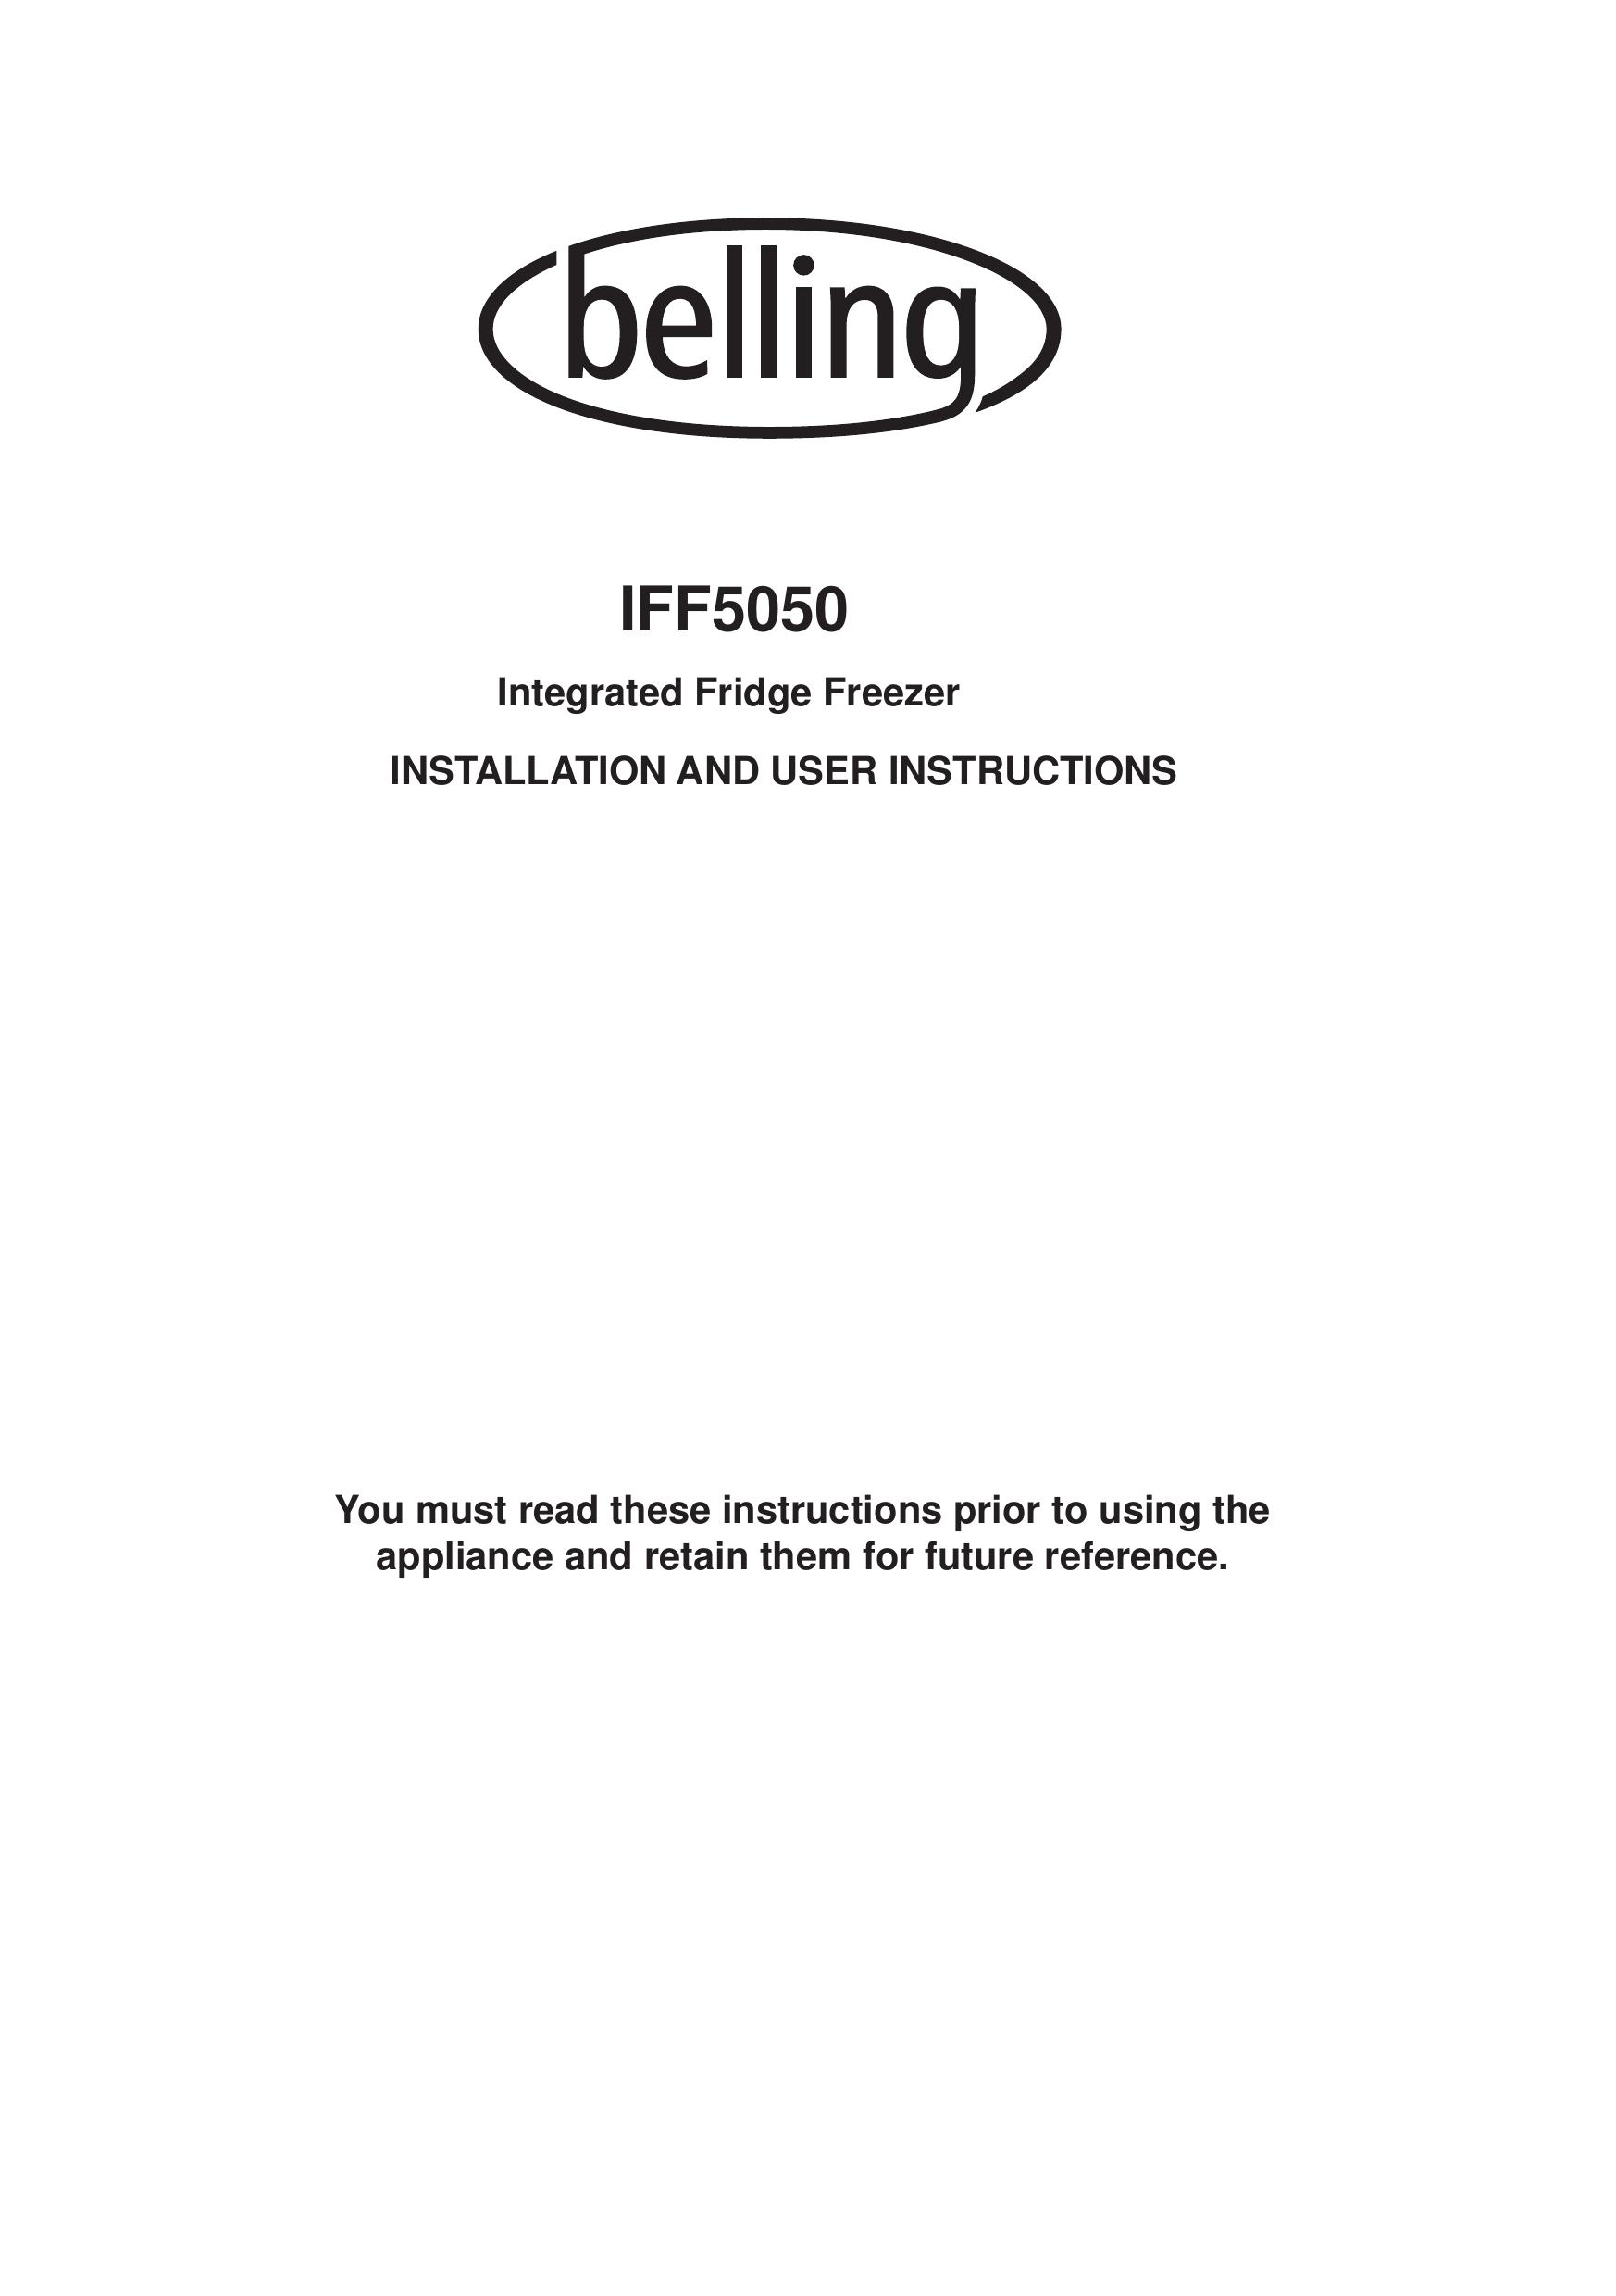 Glen Dimplex Home Appliances Ltd IFF5050 Refrigerator User Manual